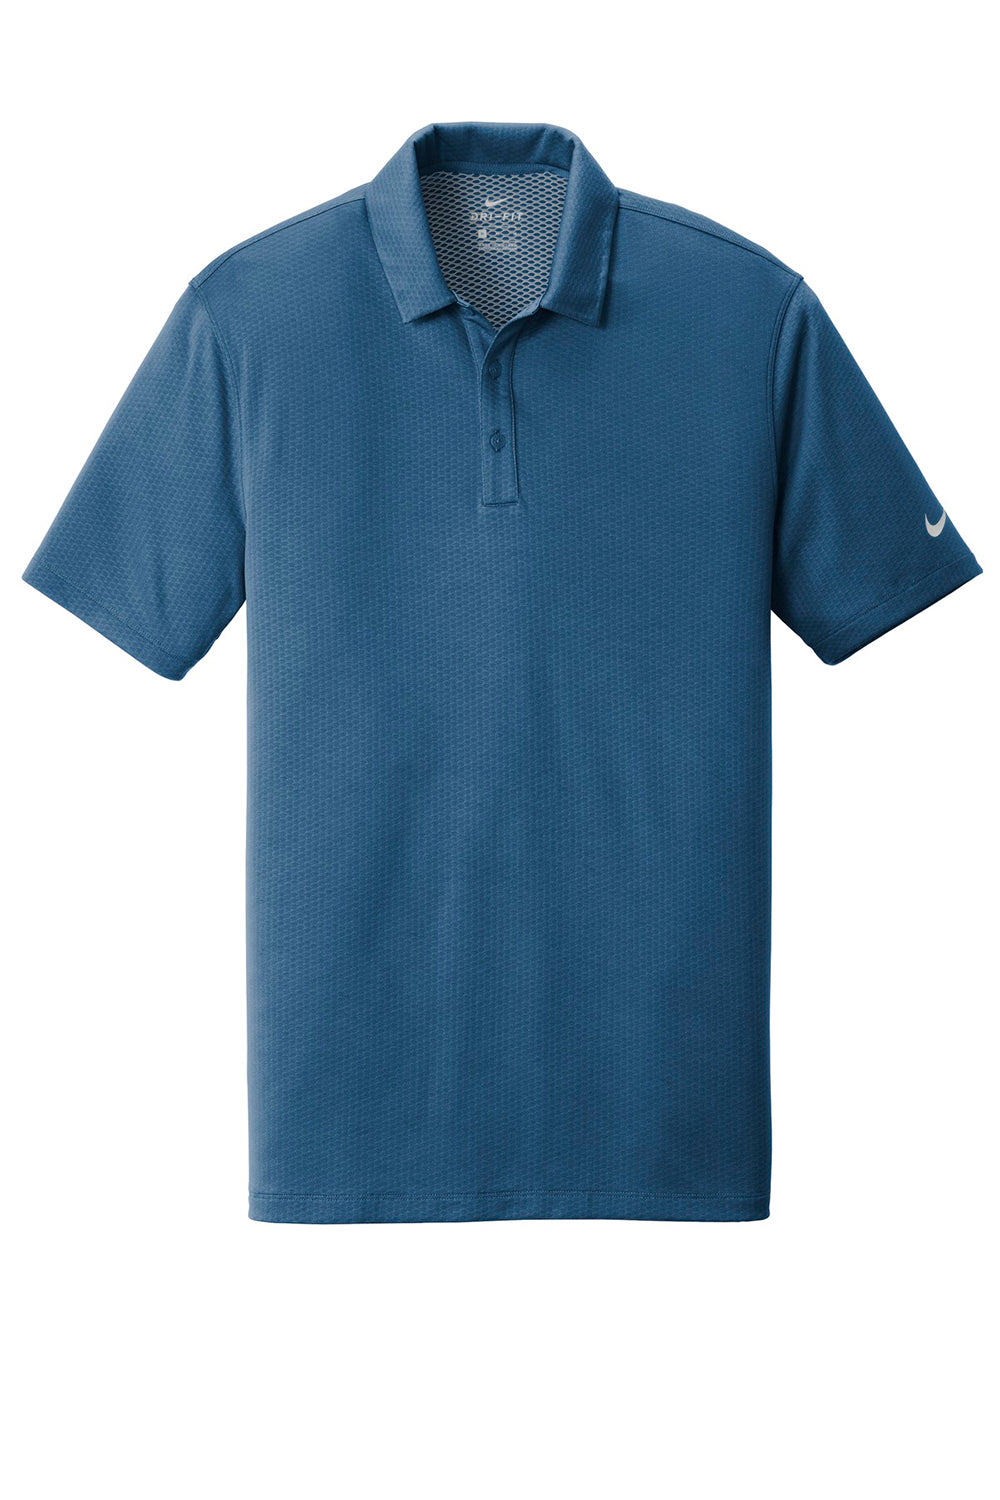 Nike NKAH6266 Mens Dri-Fit Moisture Wicking Short Sleeve Polo Shirt Court Blue Flat Front